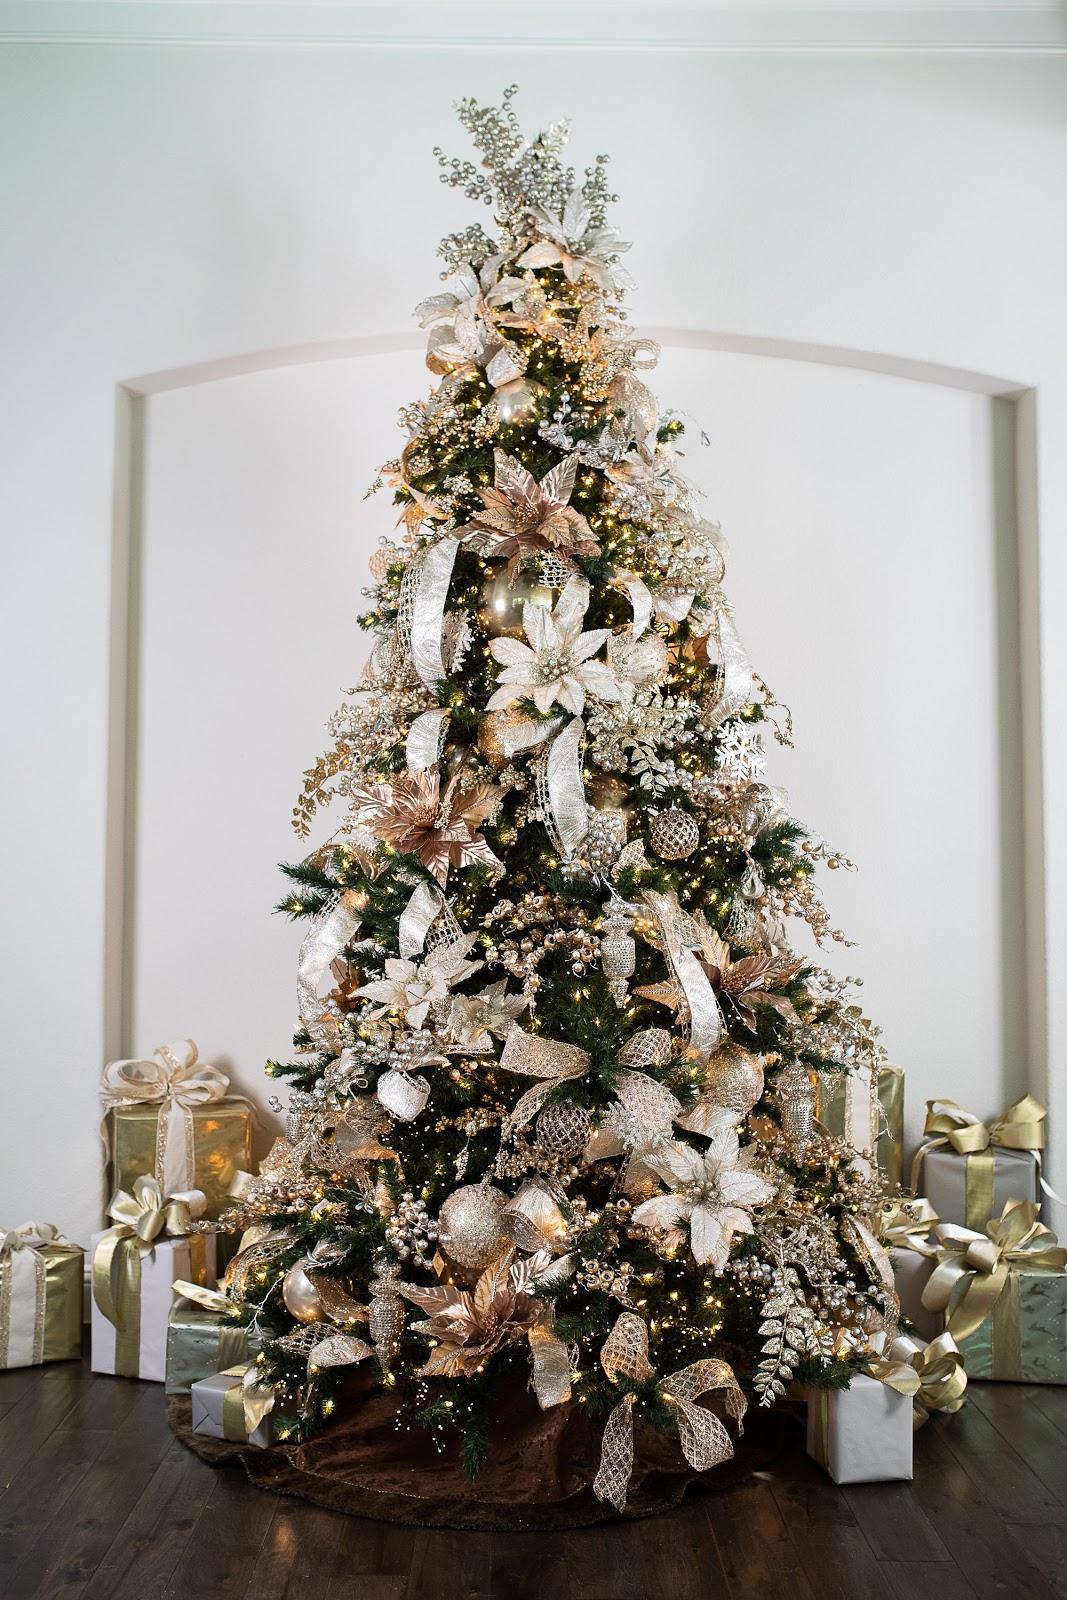 Christmas Decorating Trends 2020: χριστουγεννιάτικο δέντρο στολισμένο σε platinum αποχρώσεις 